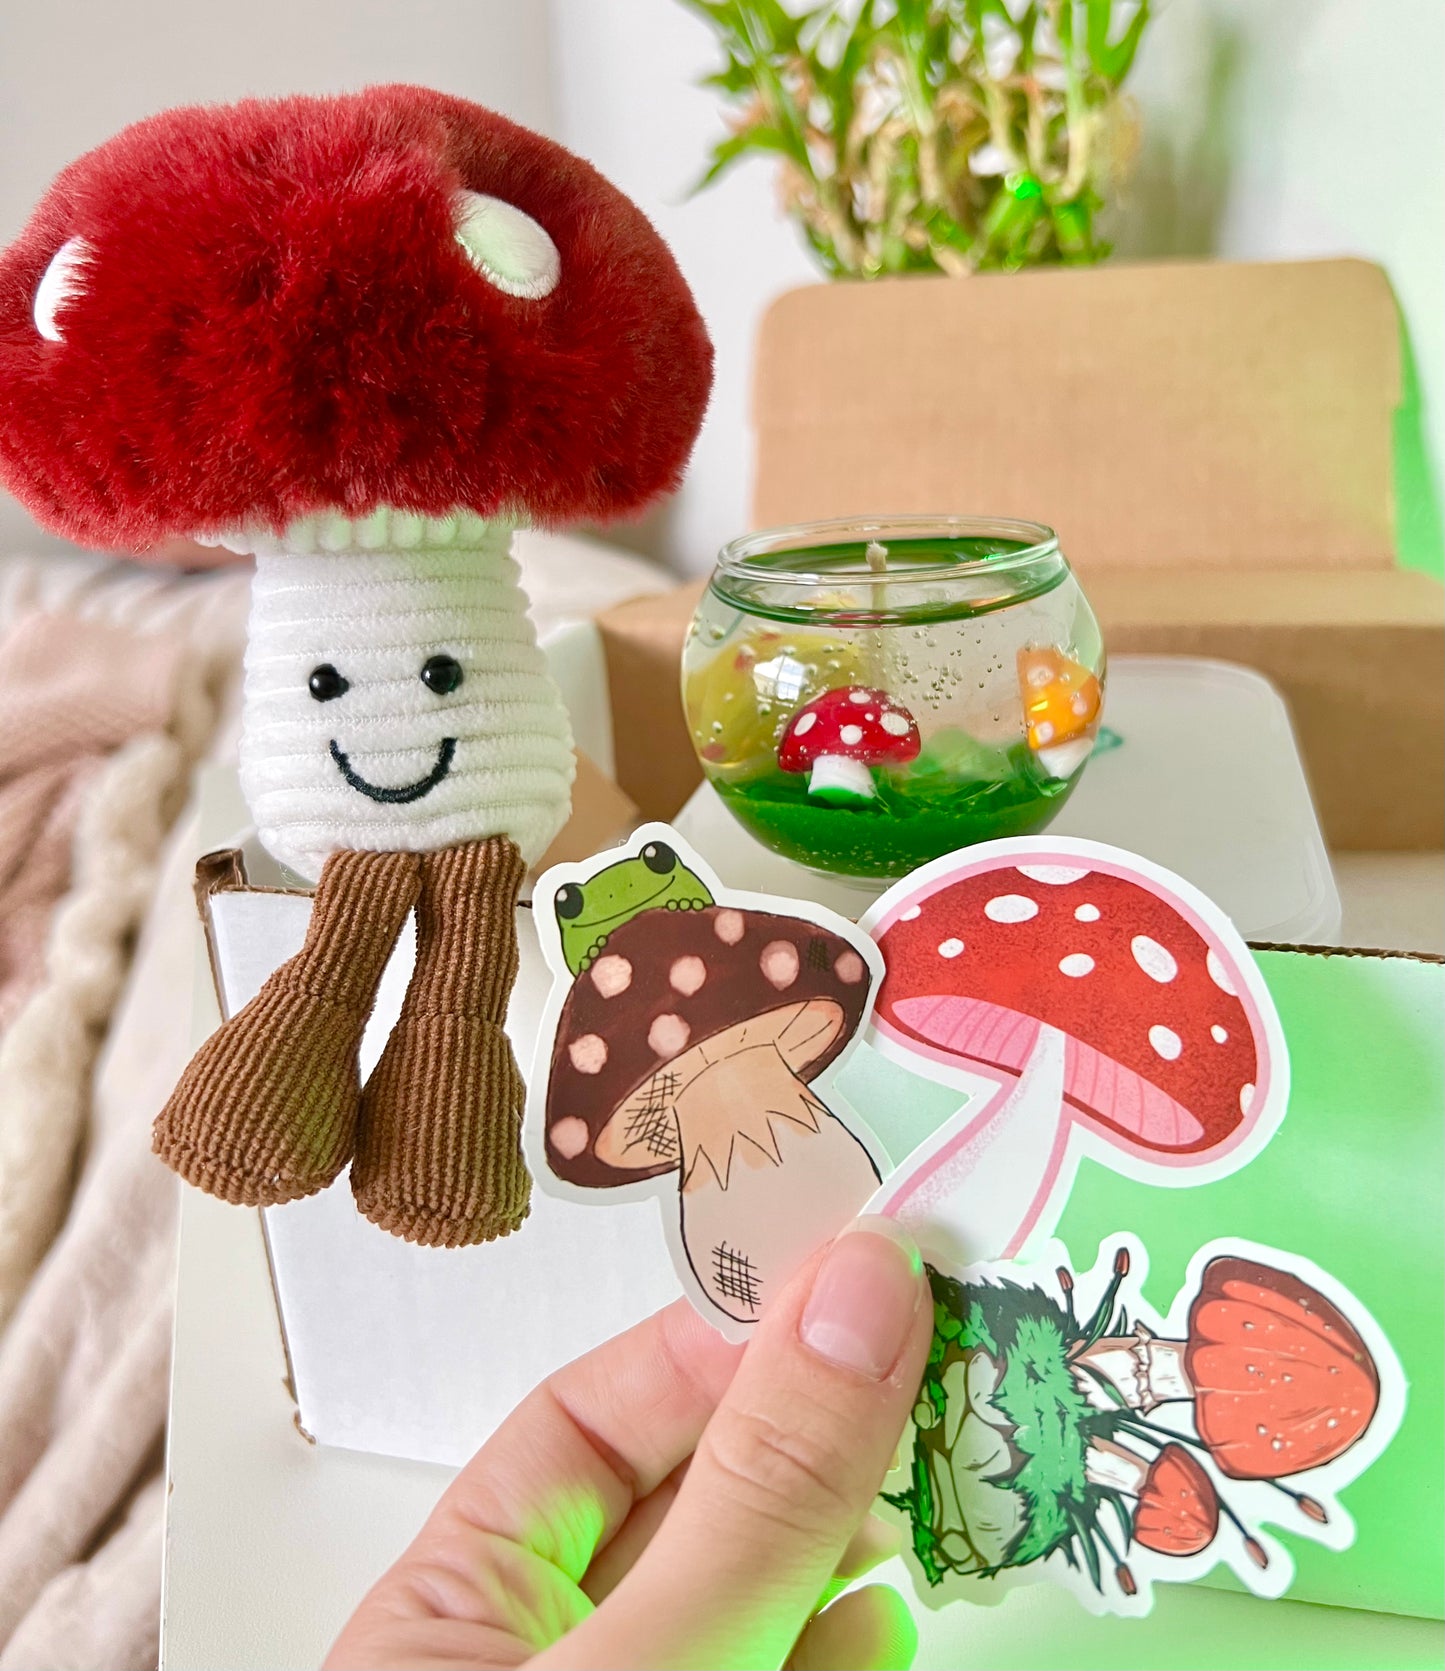 Mushroom Obsession Gift Box